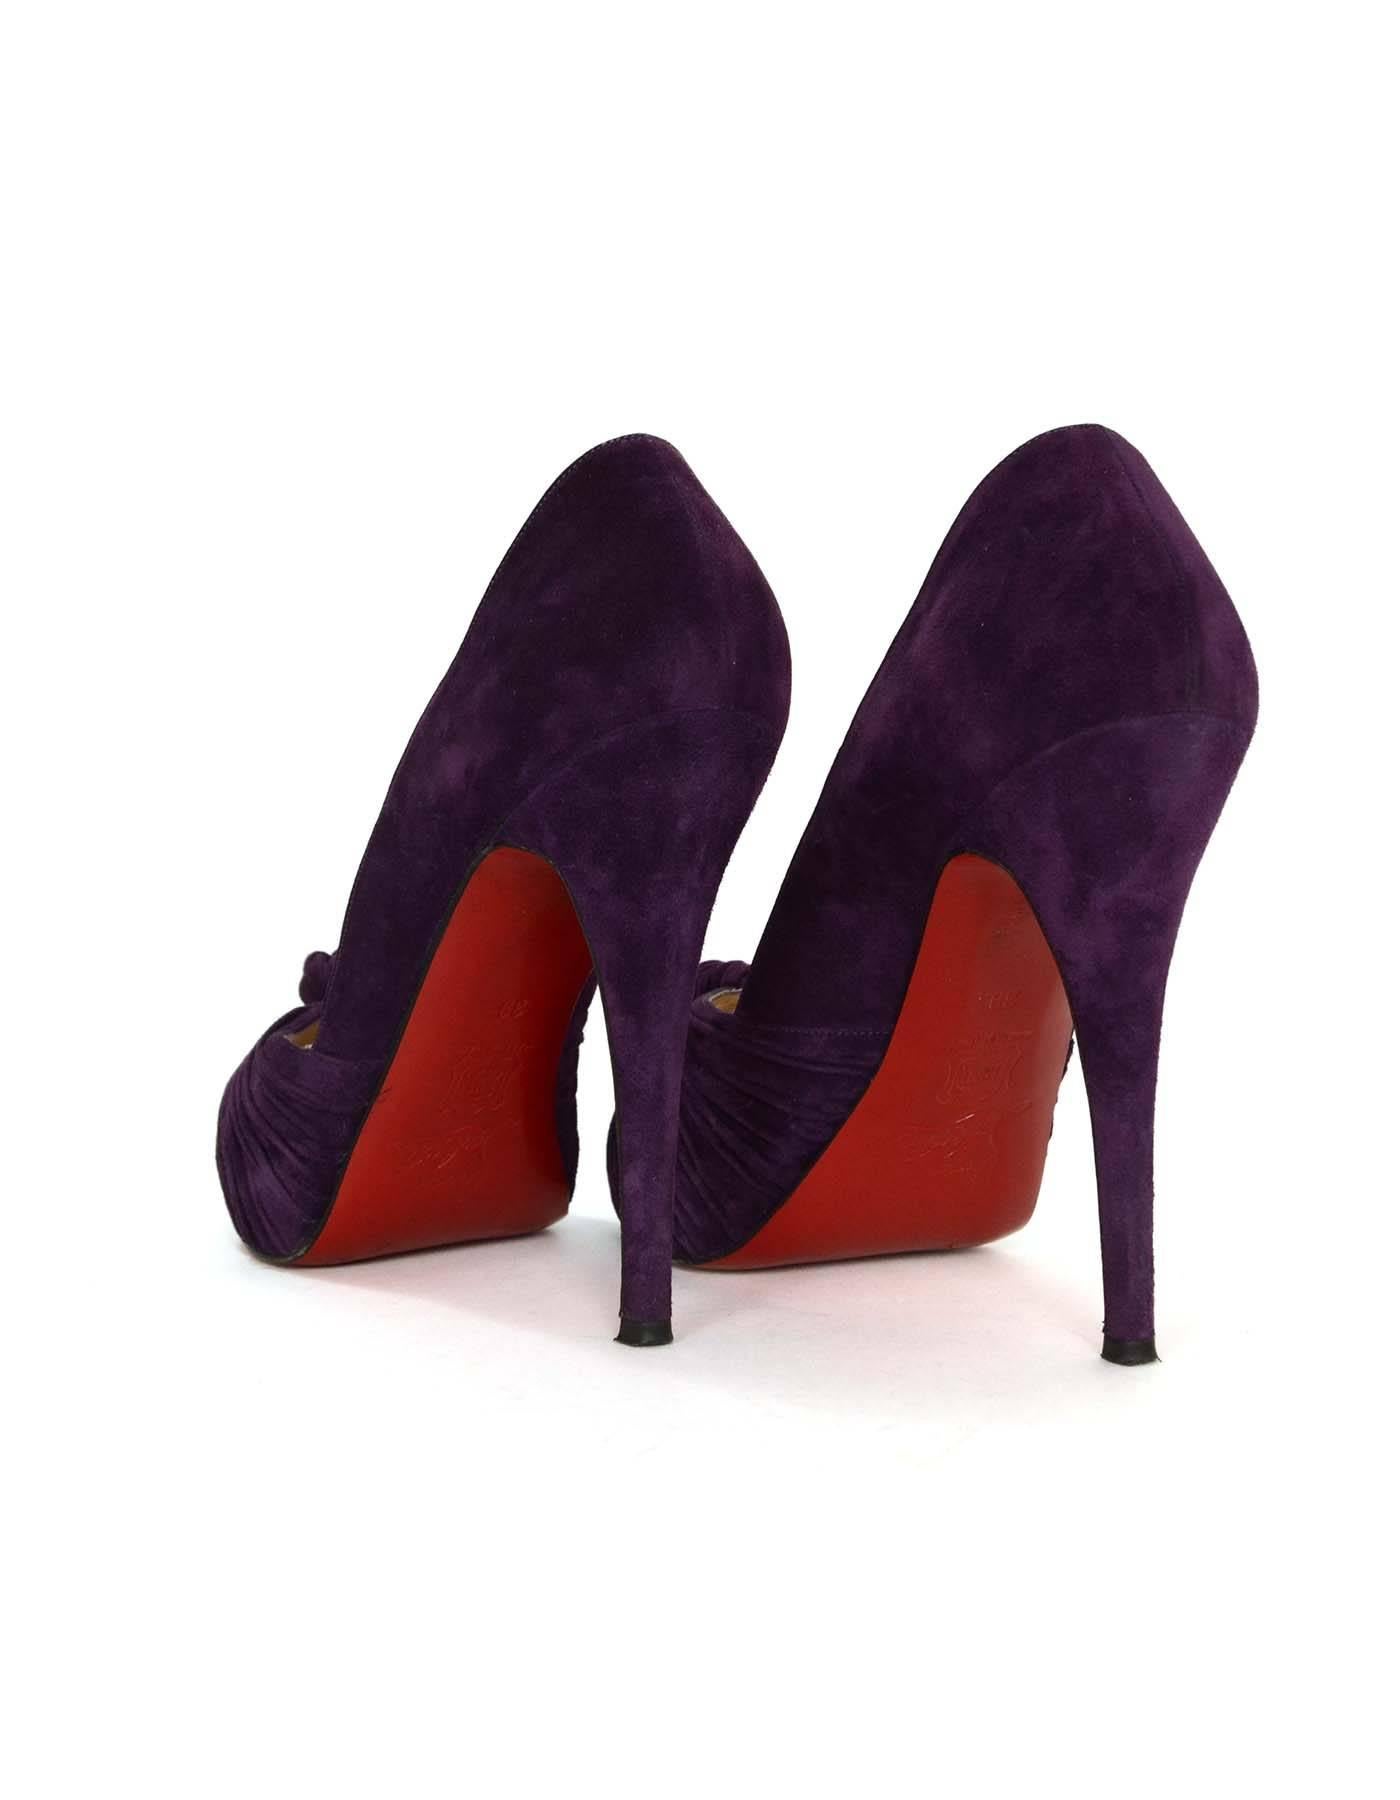 Women's Christian Louboutin Purple Suede Peep-Toe Pumps sz 39